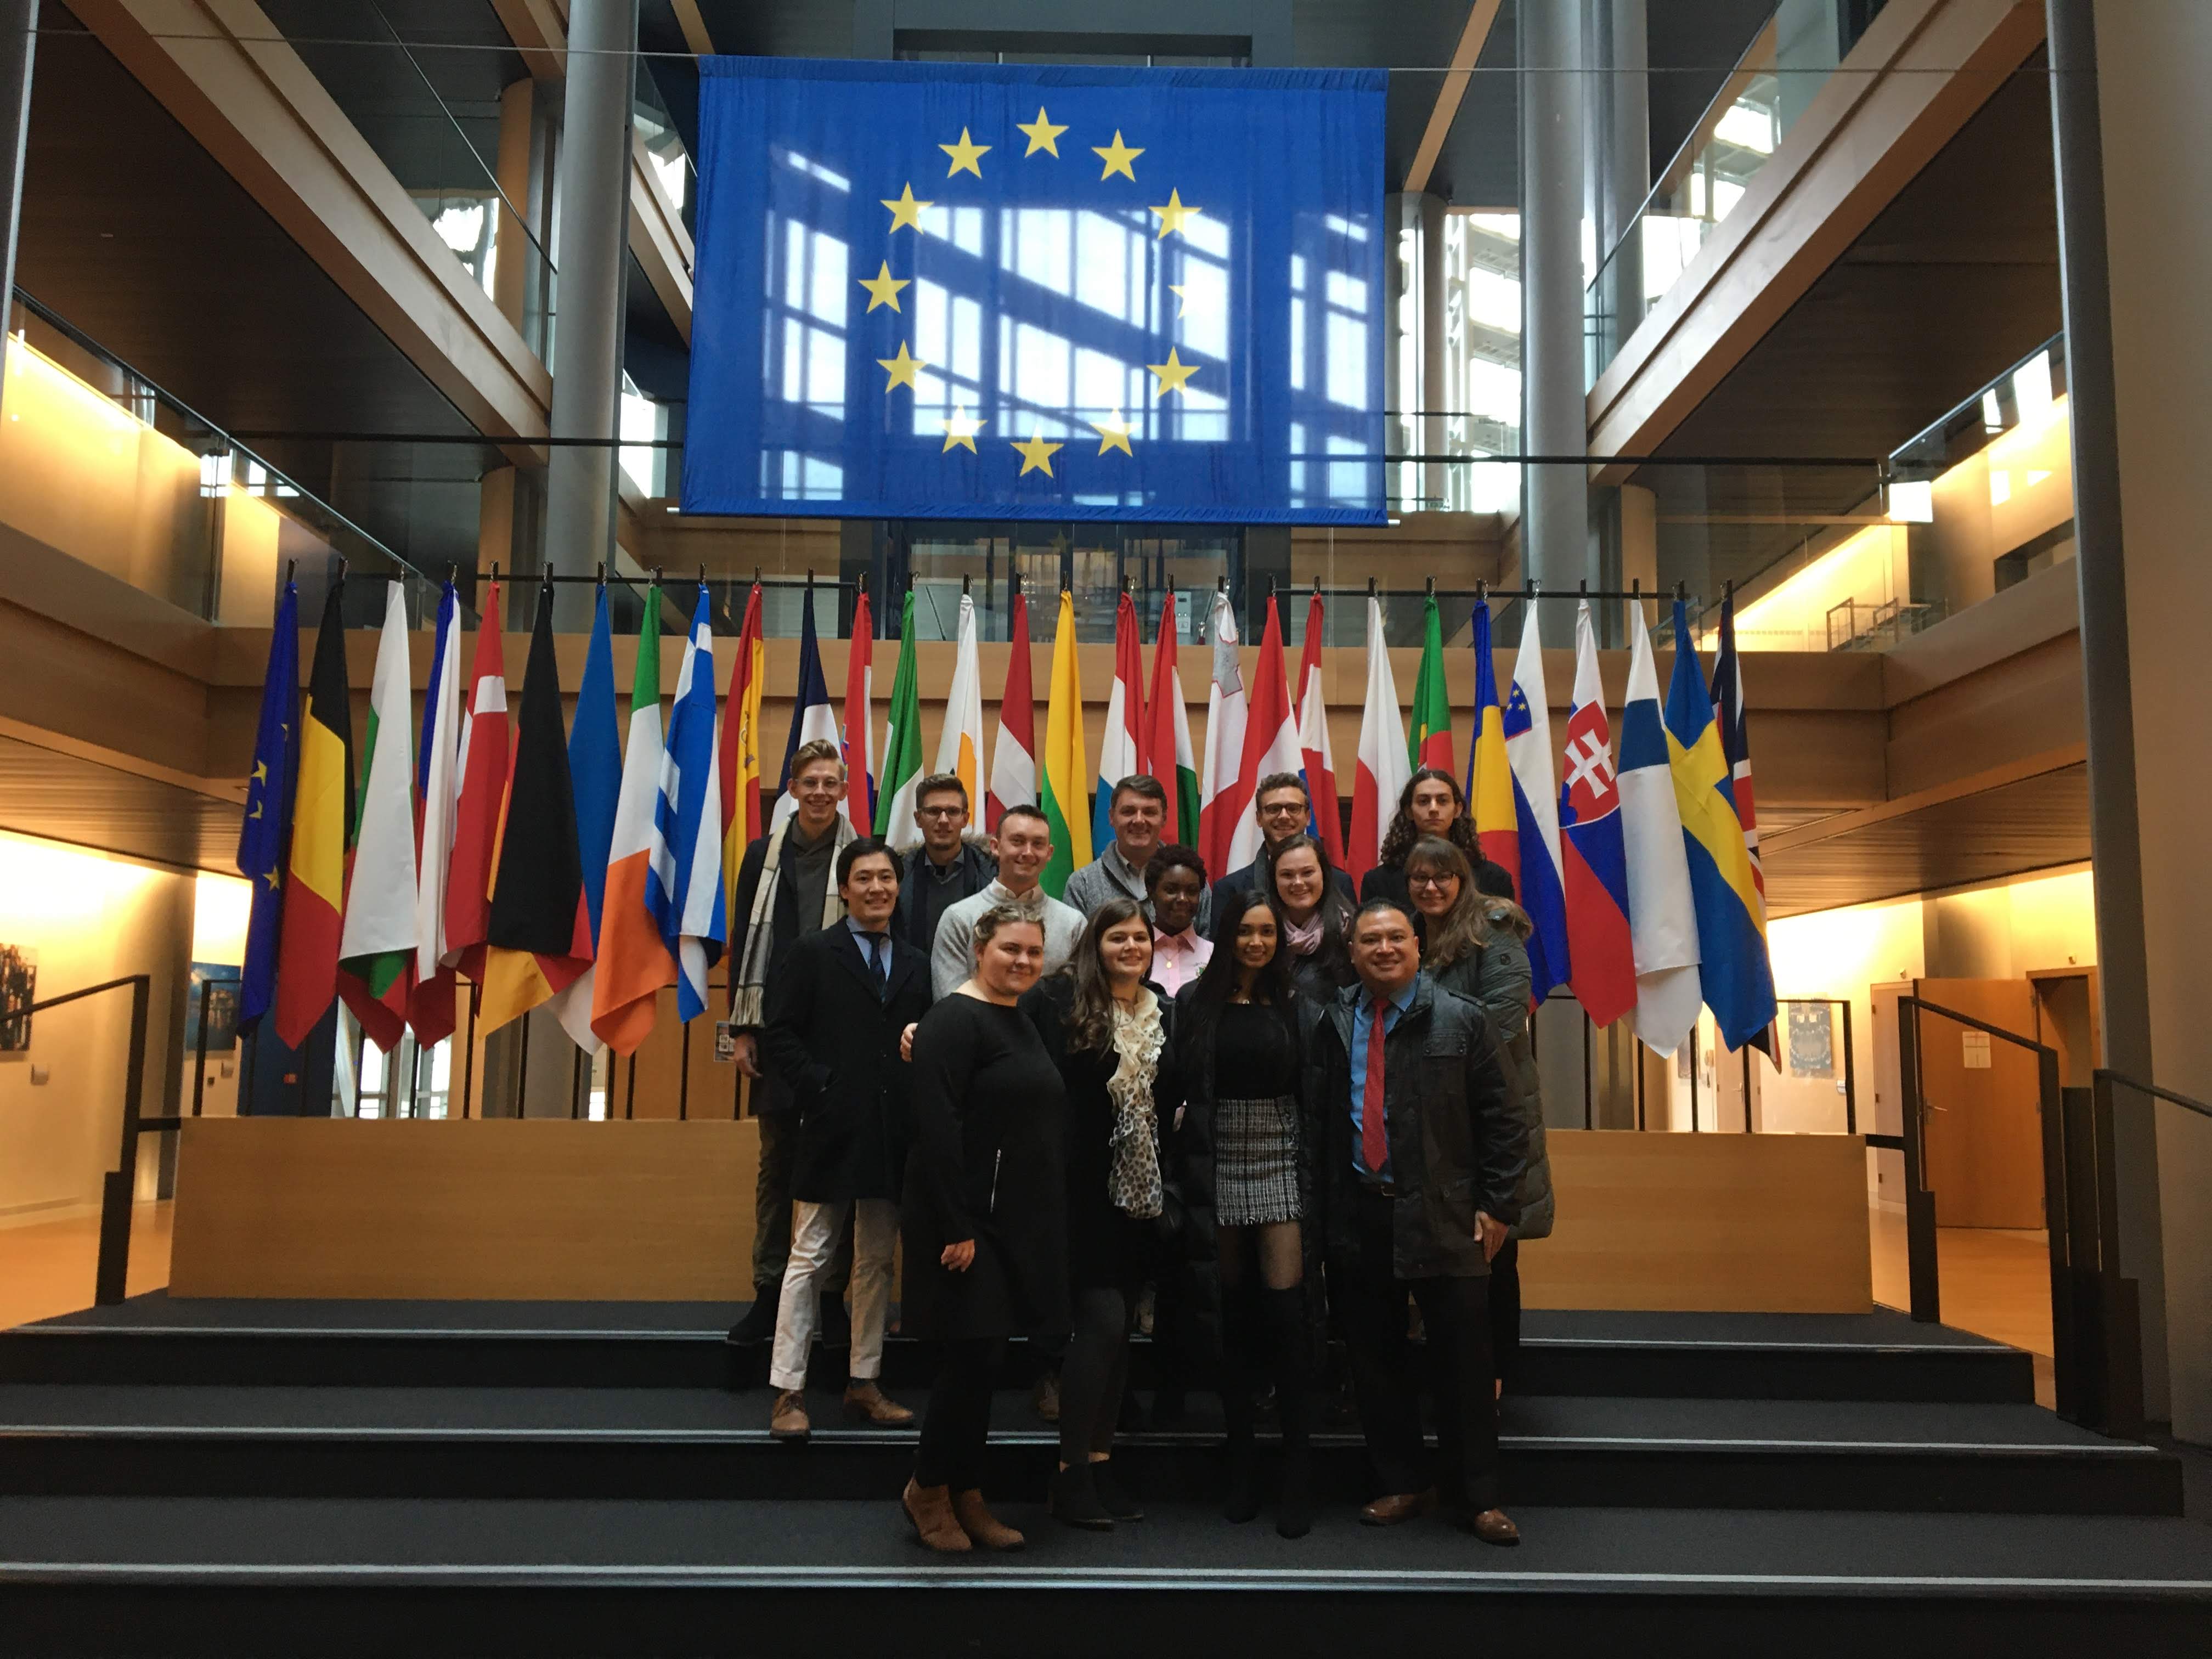 International Studies Studies at the EU Parliament in Strasbourg, France